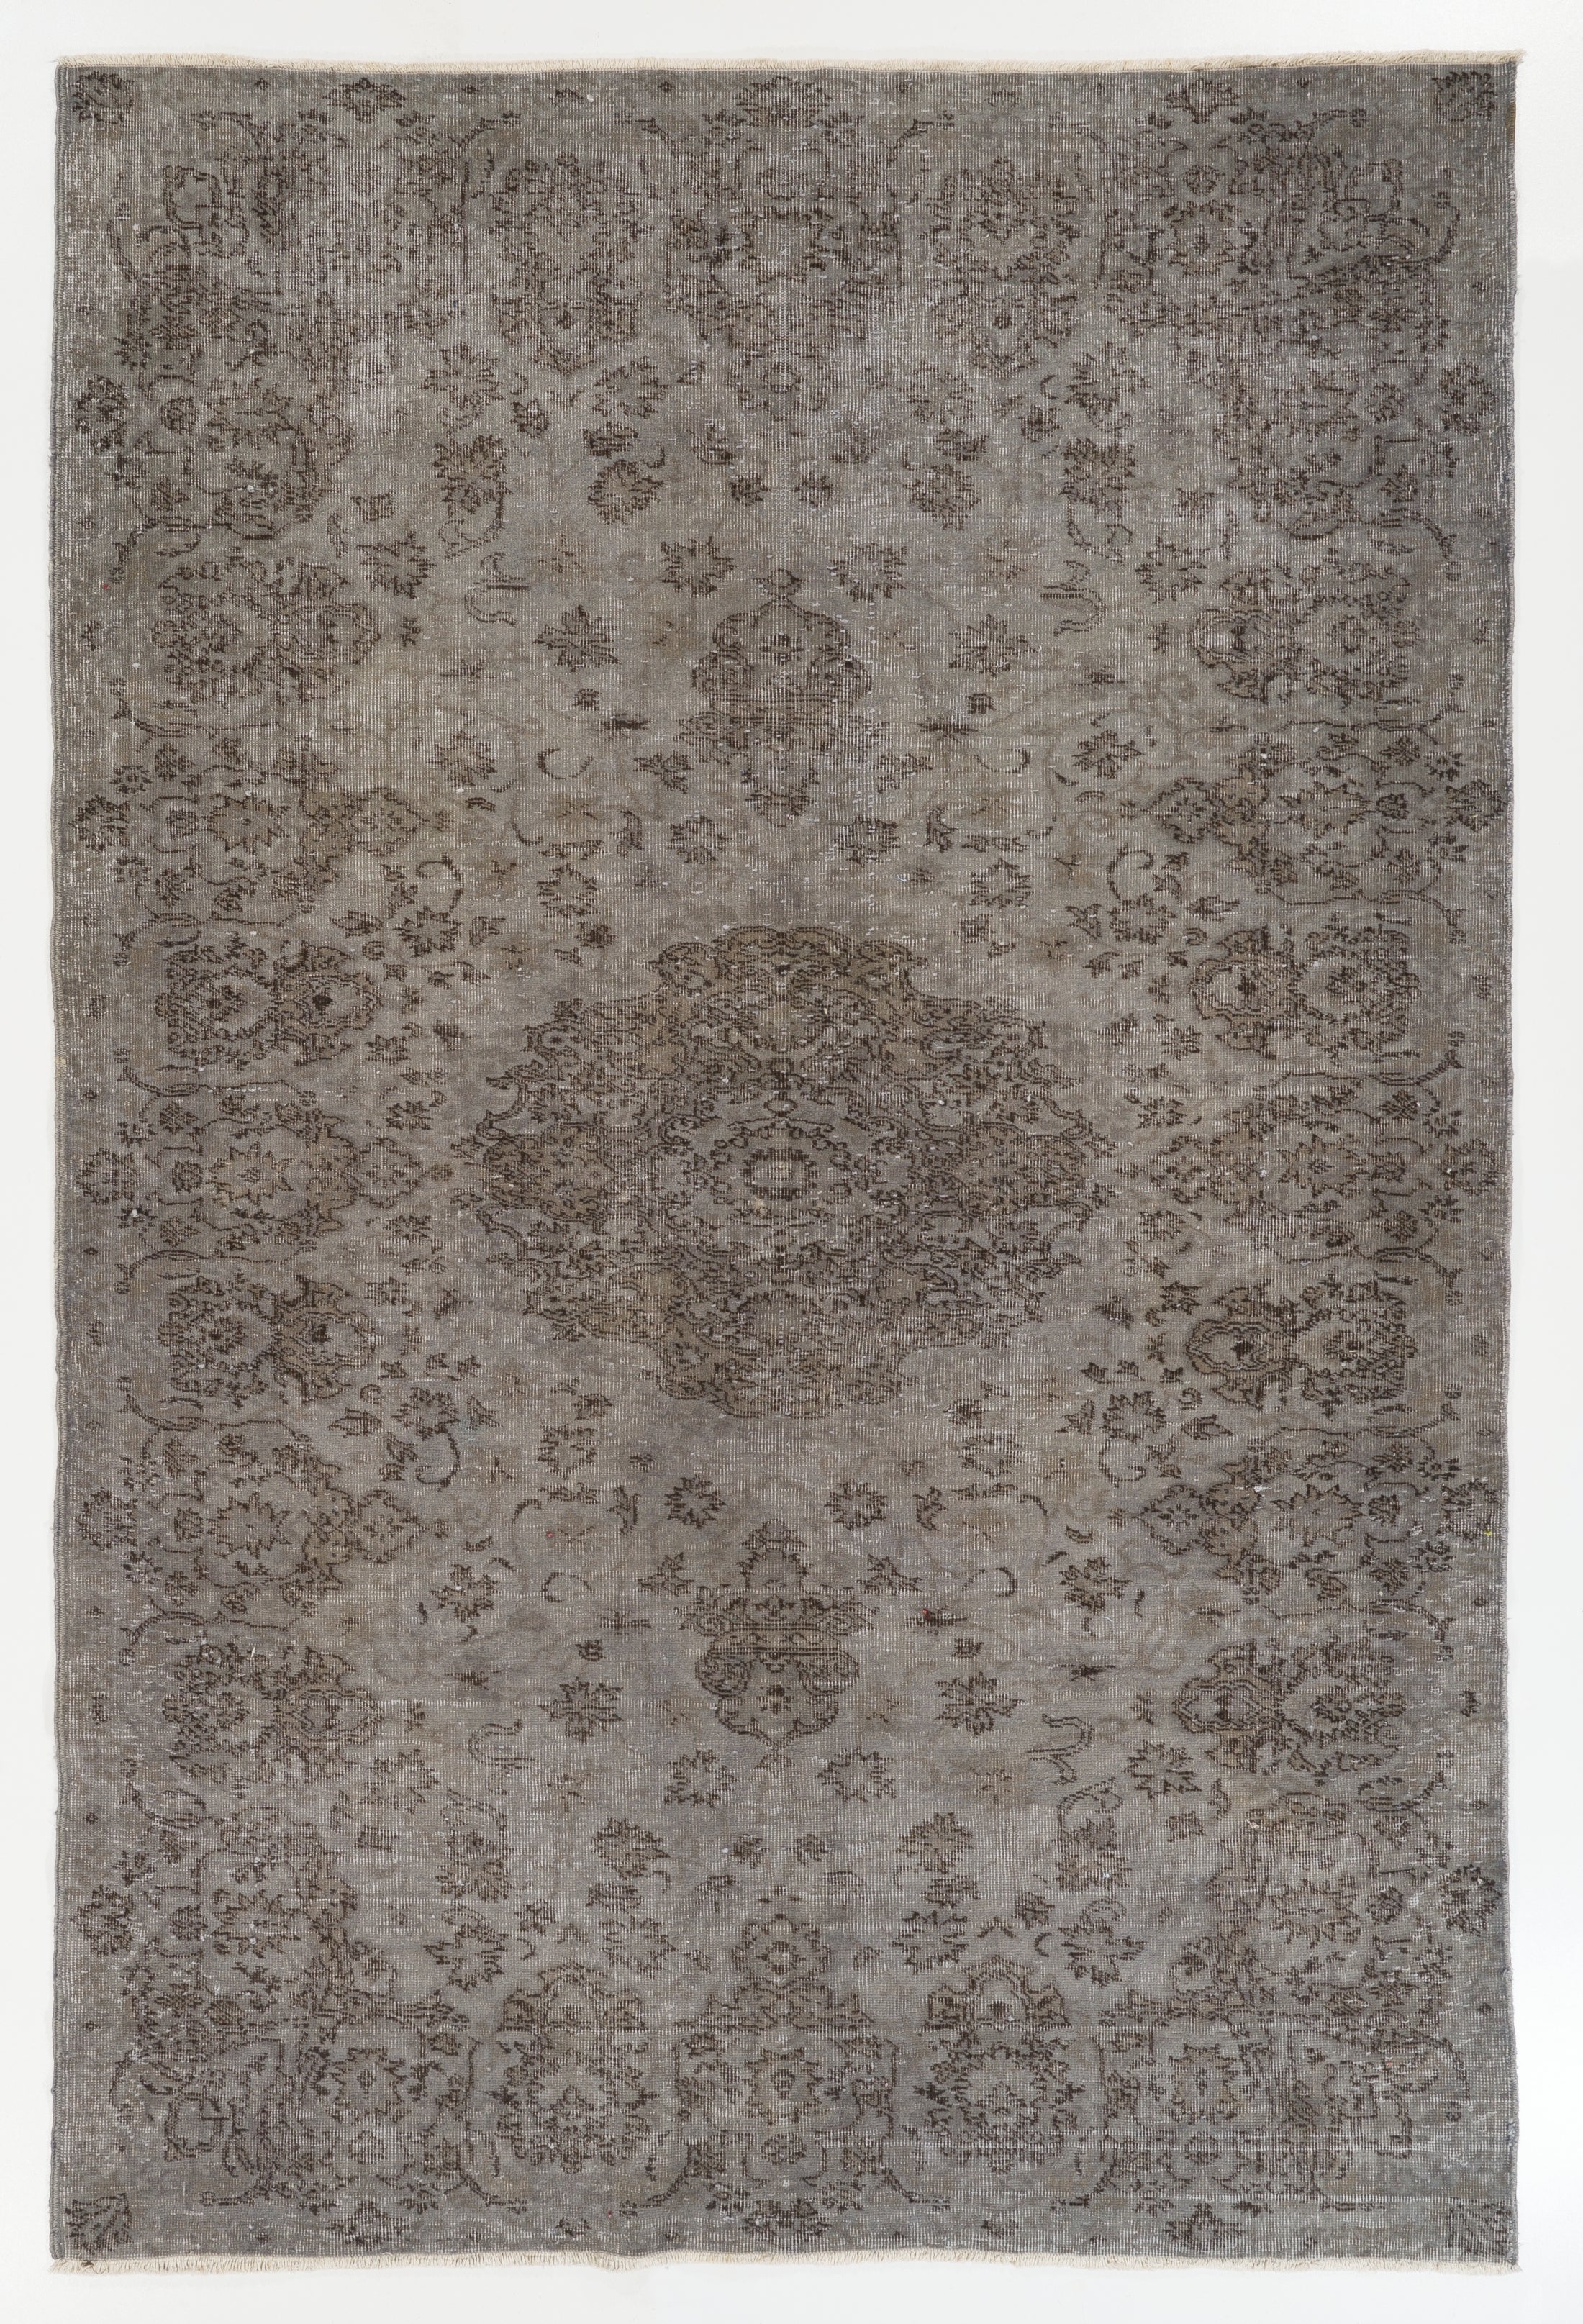 6x9.2 Ft Vintage Handmade Turkish Area Rug. Modern Gray Overdyed Wool Carpet